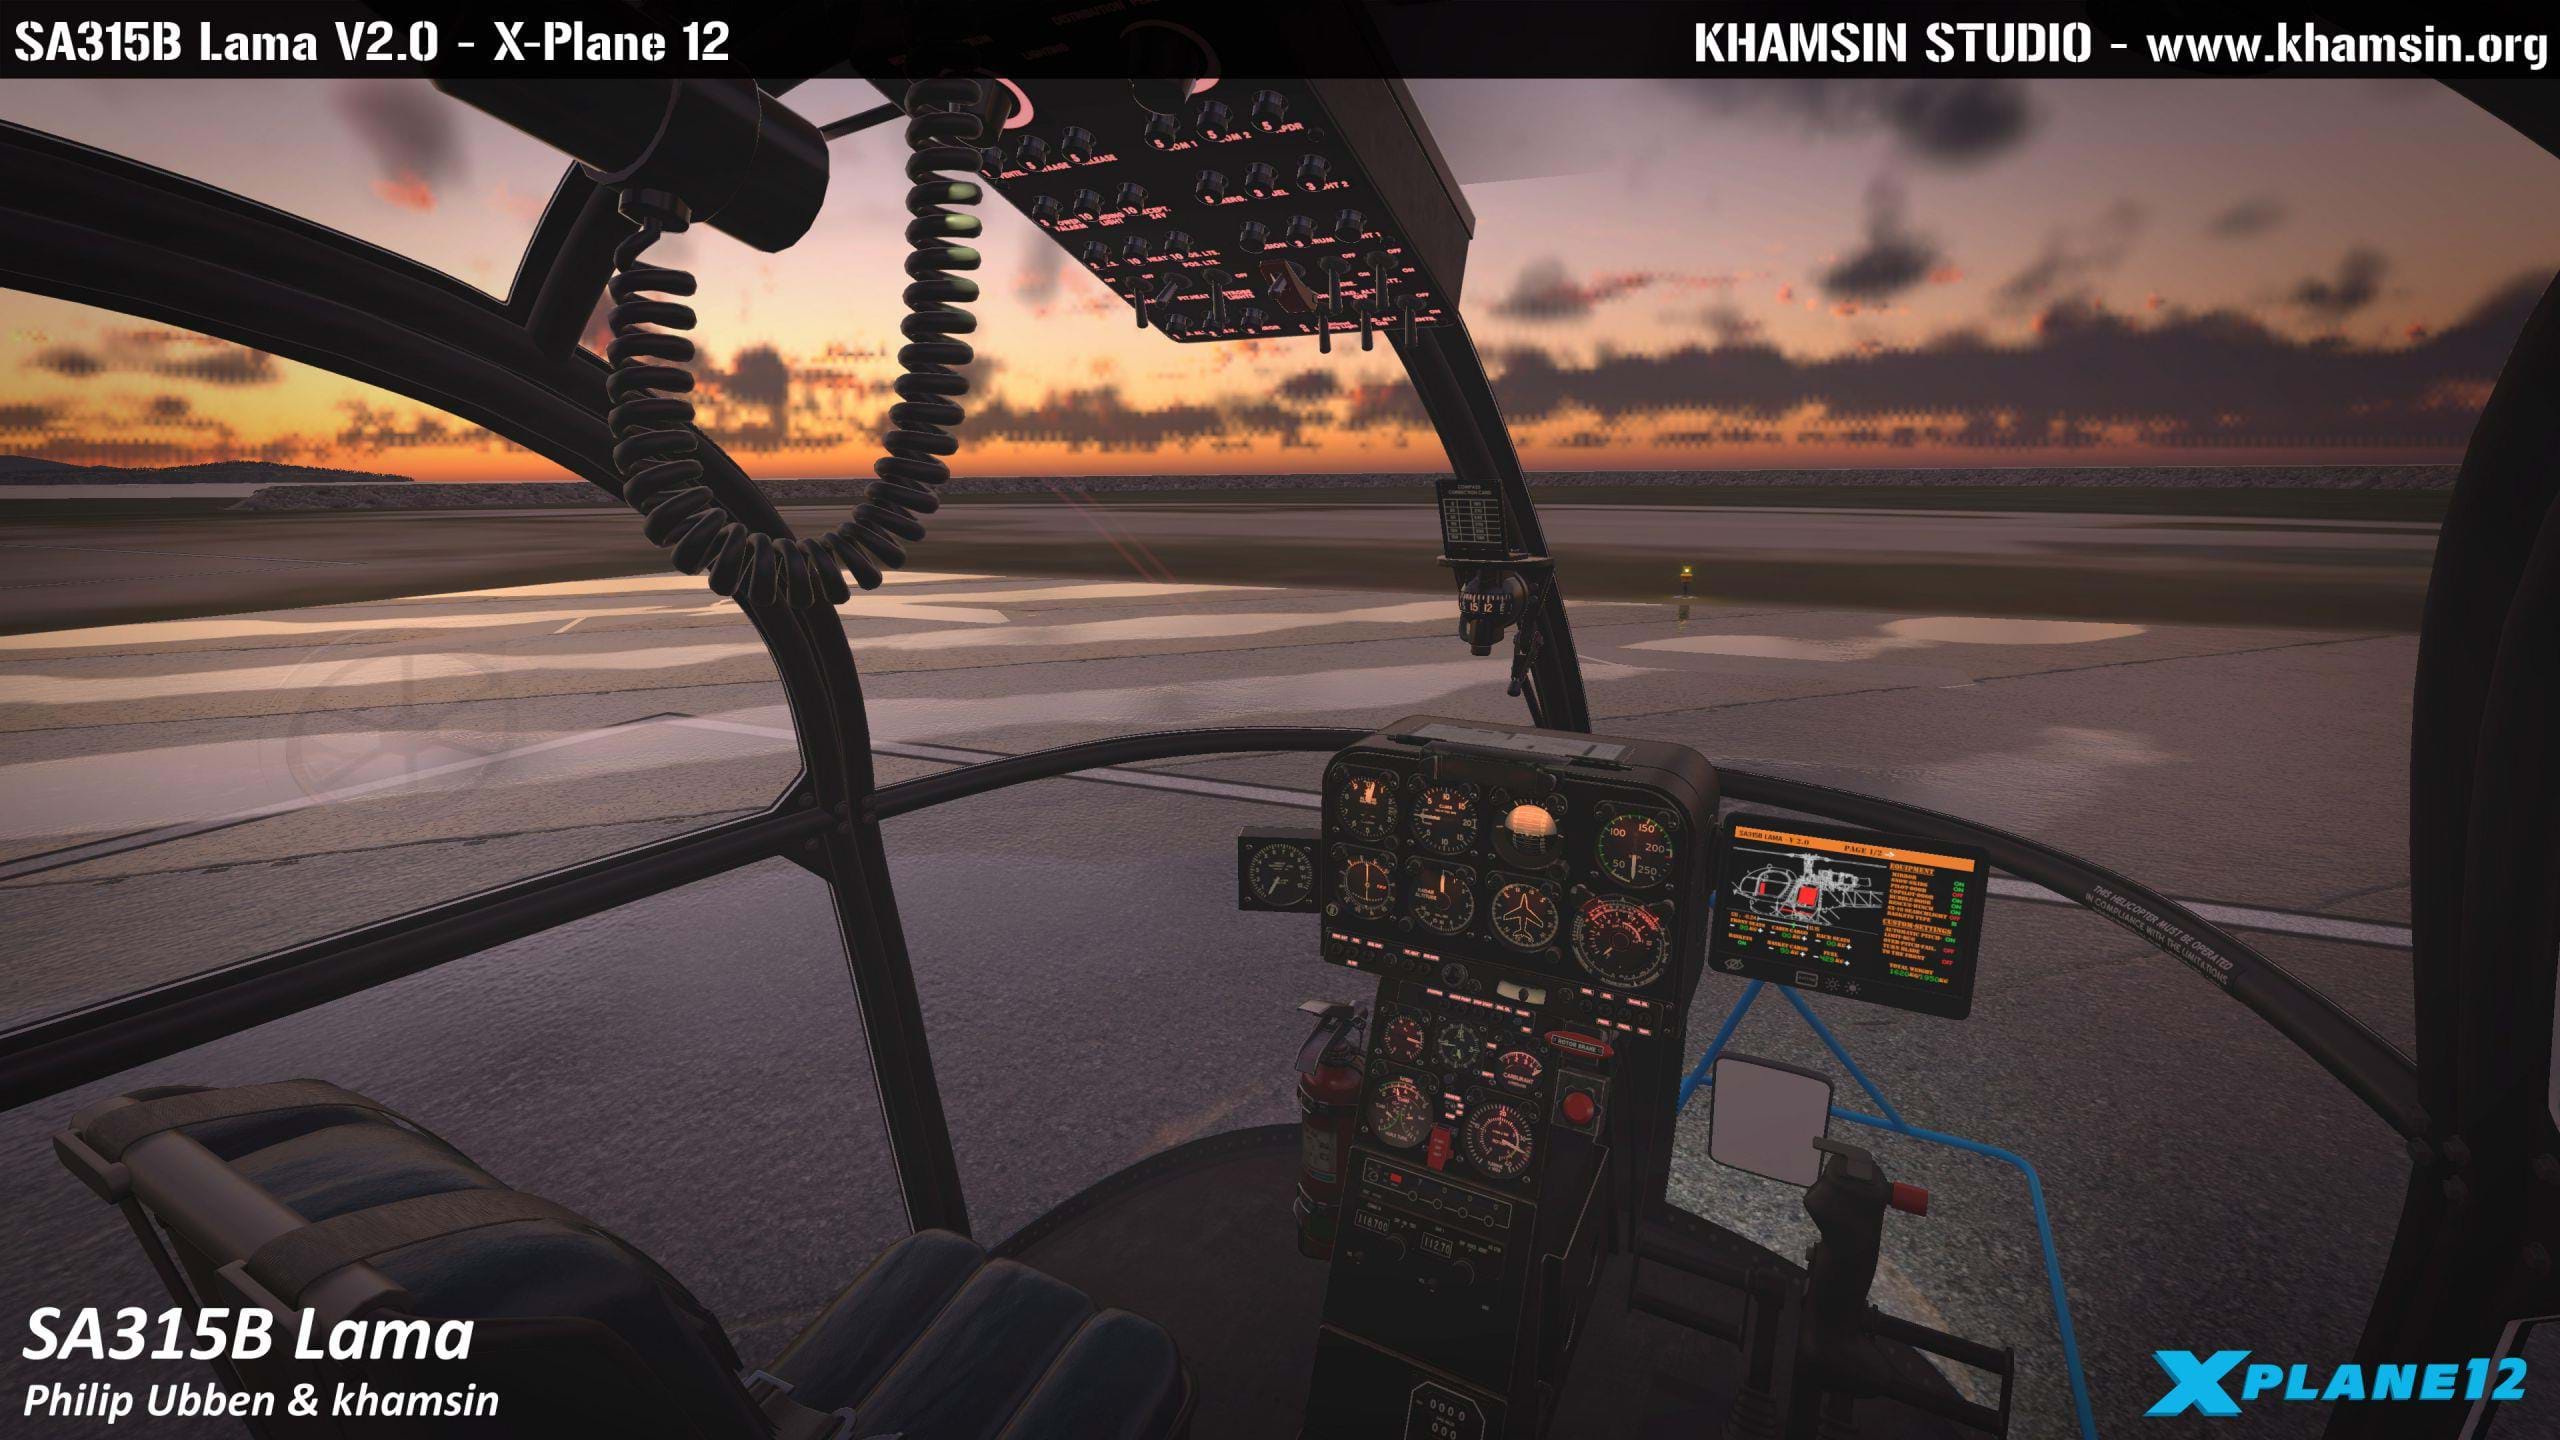 Philip Ubben/Khamsin Studios SA-315 Lama being updated for X-Plane 12